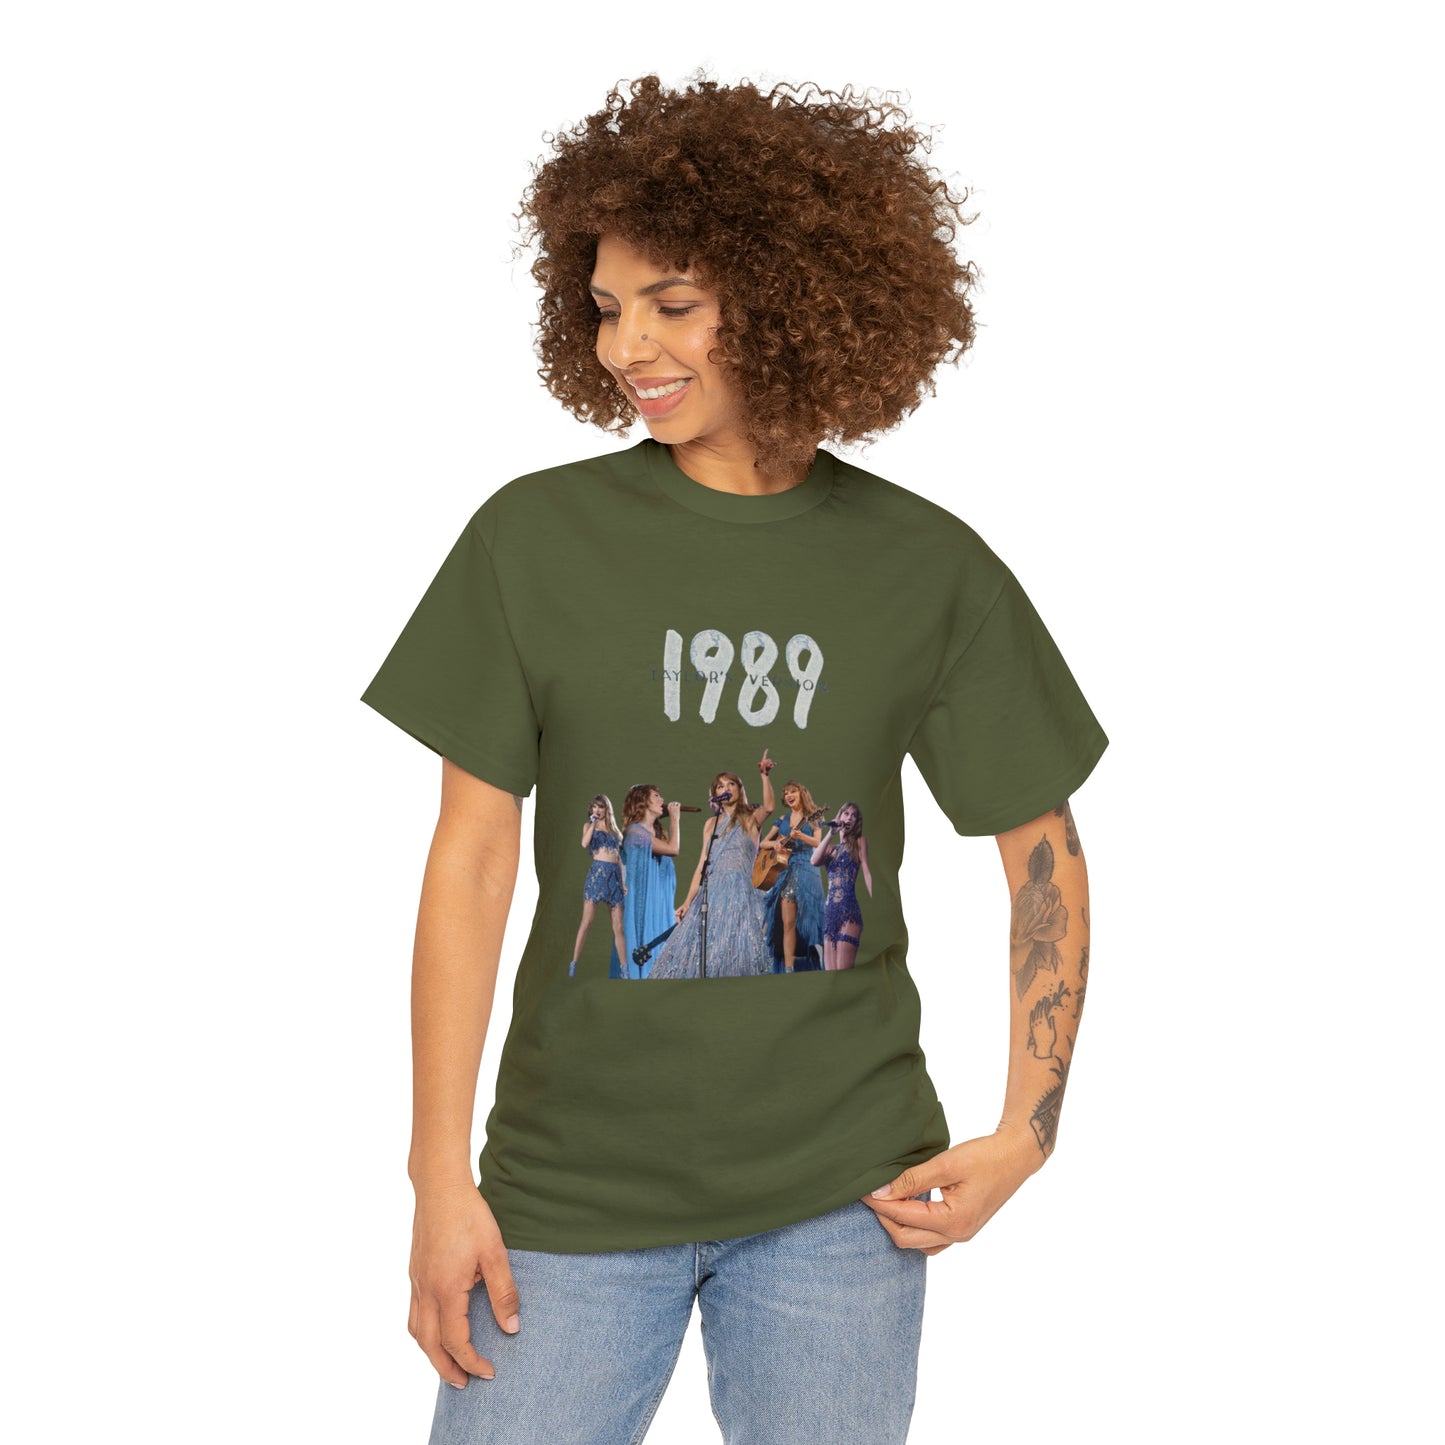 1989 Taylors Version, T-Shirt Eras Tour, Red, Fearless, Speak Now, Eras Tour Merch